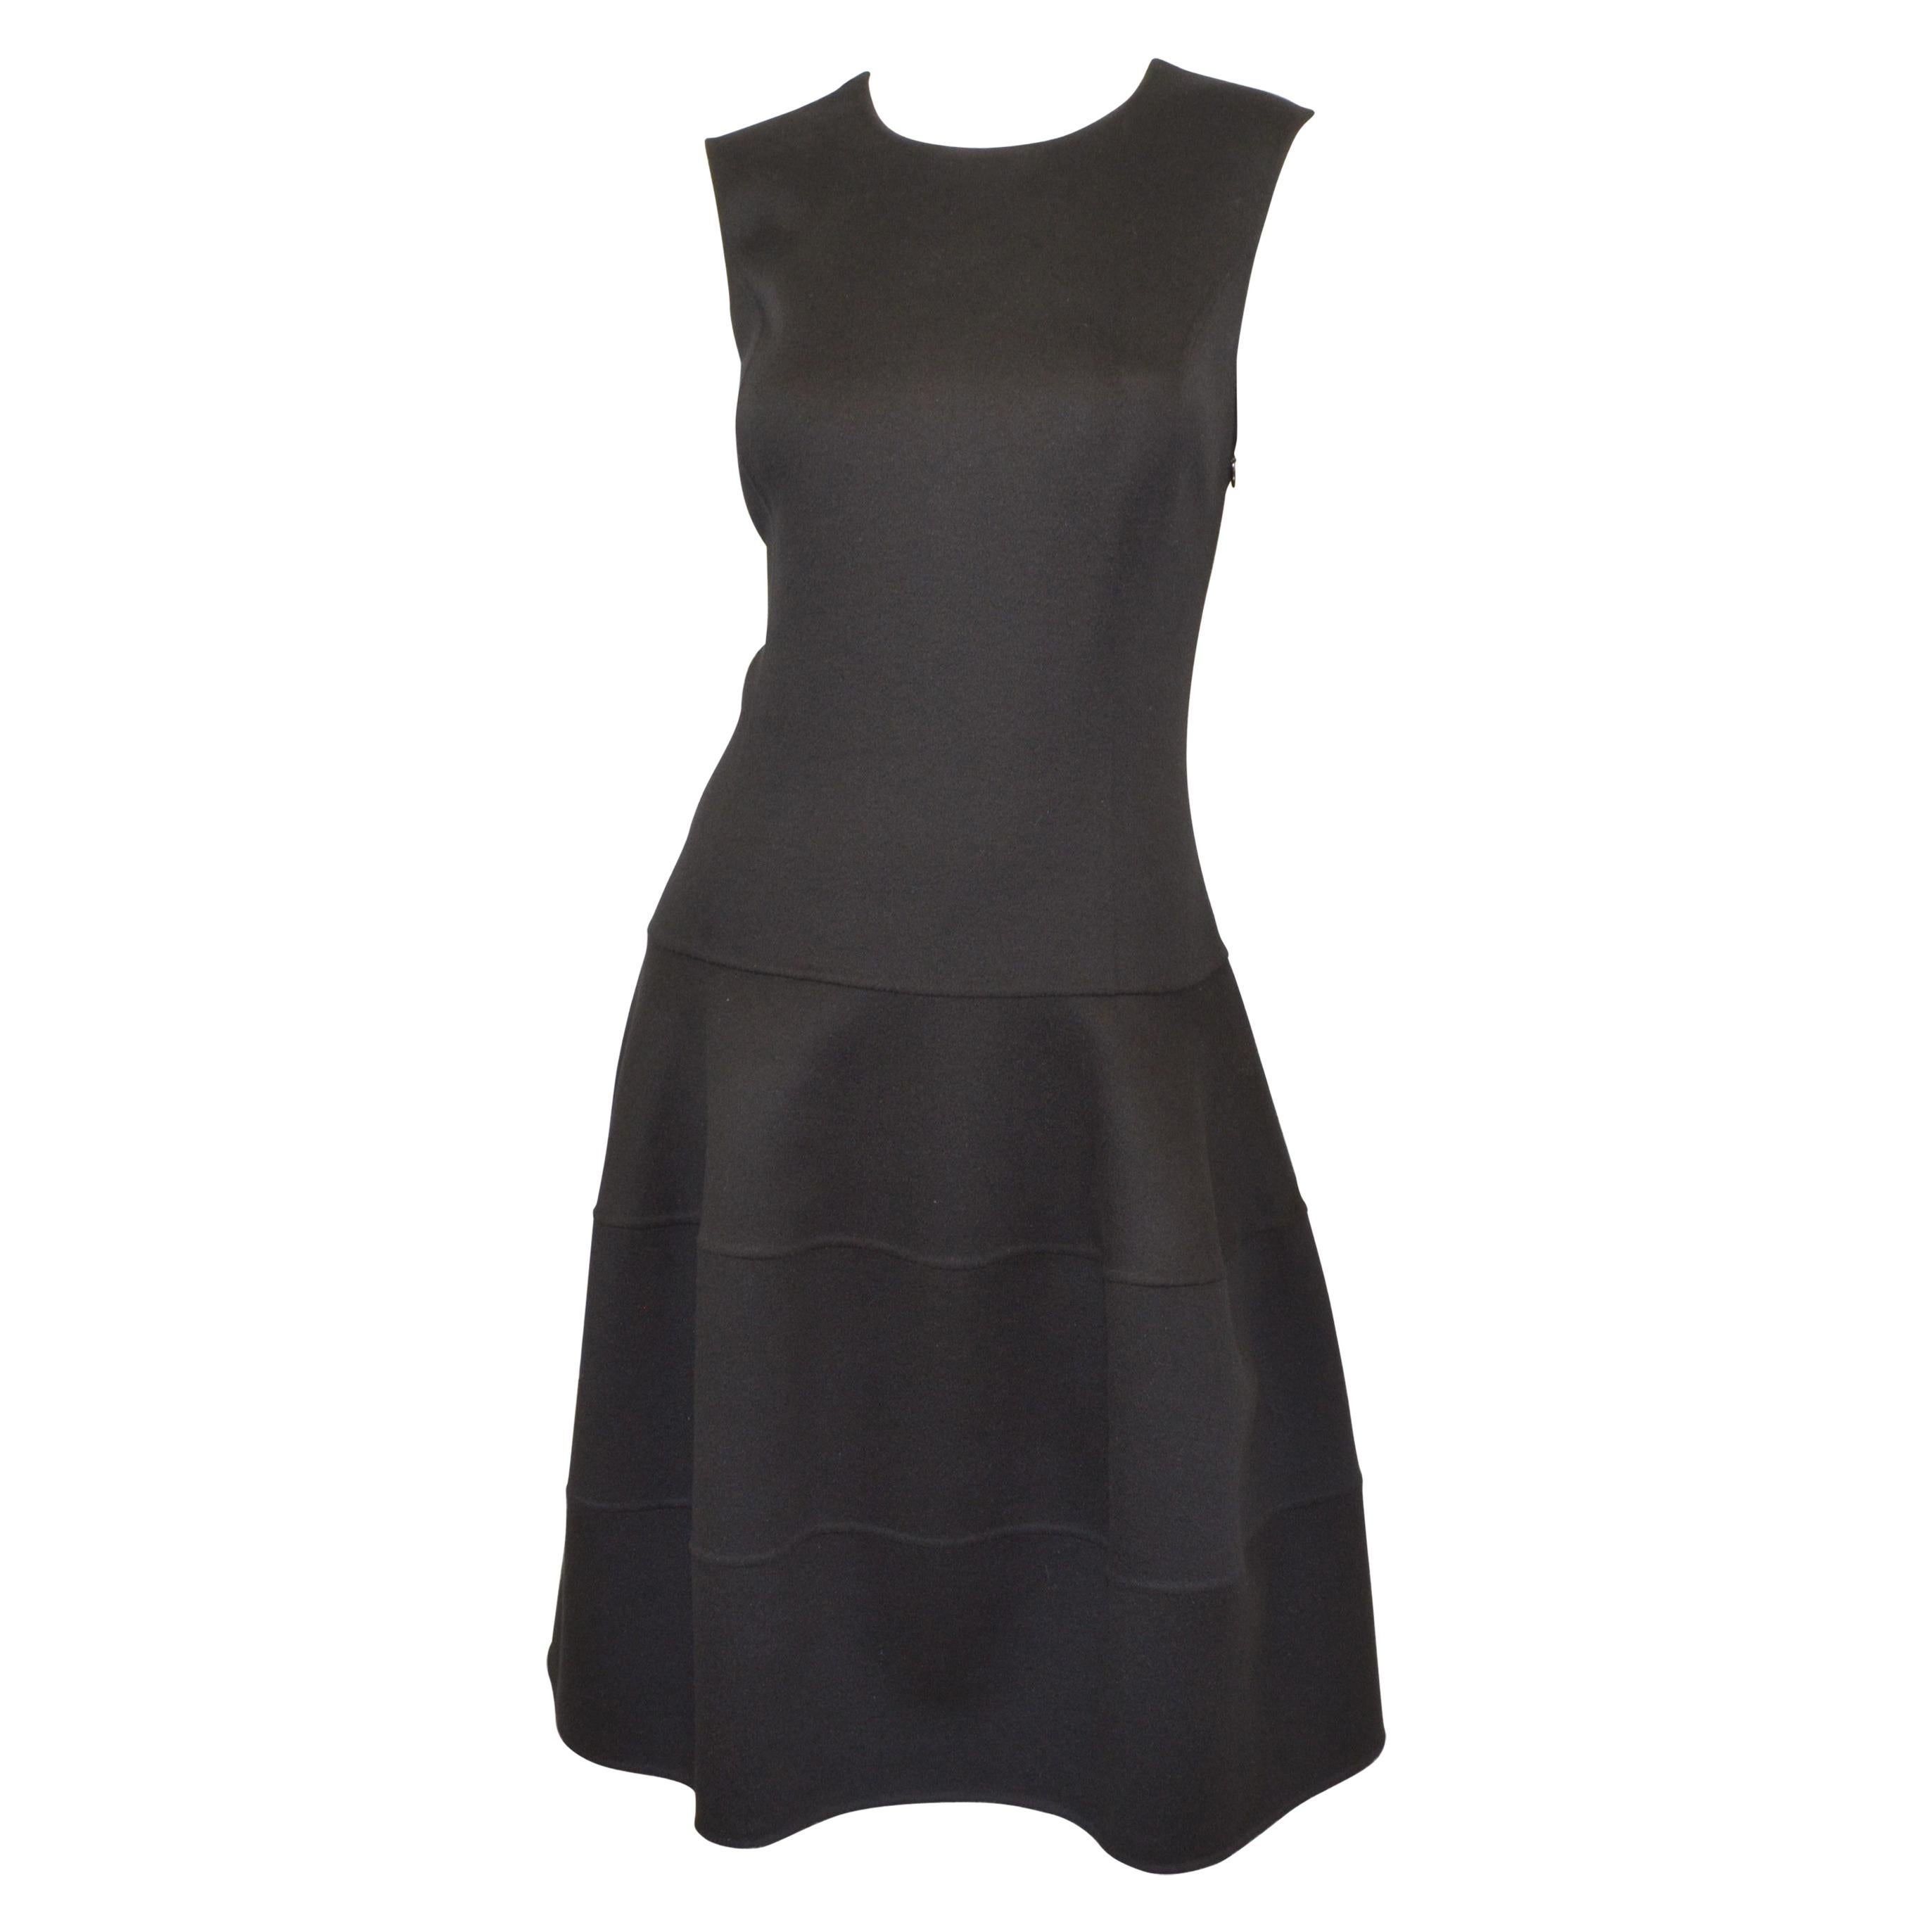 Michael Kors Black Wool/Angora Blend Dress NWT